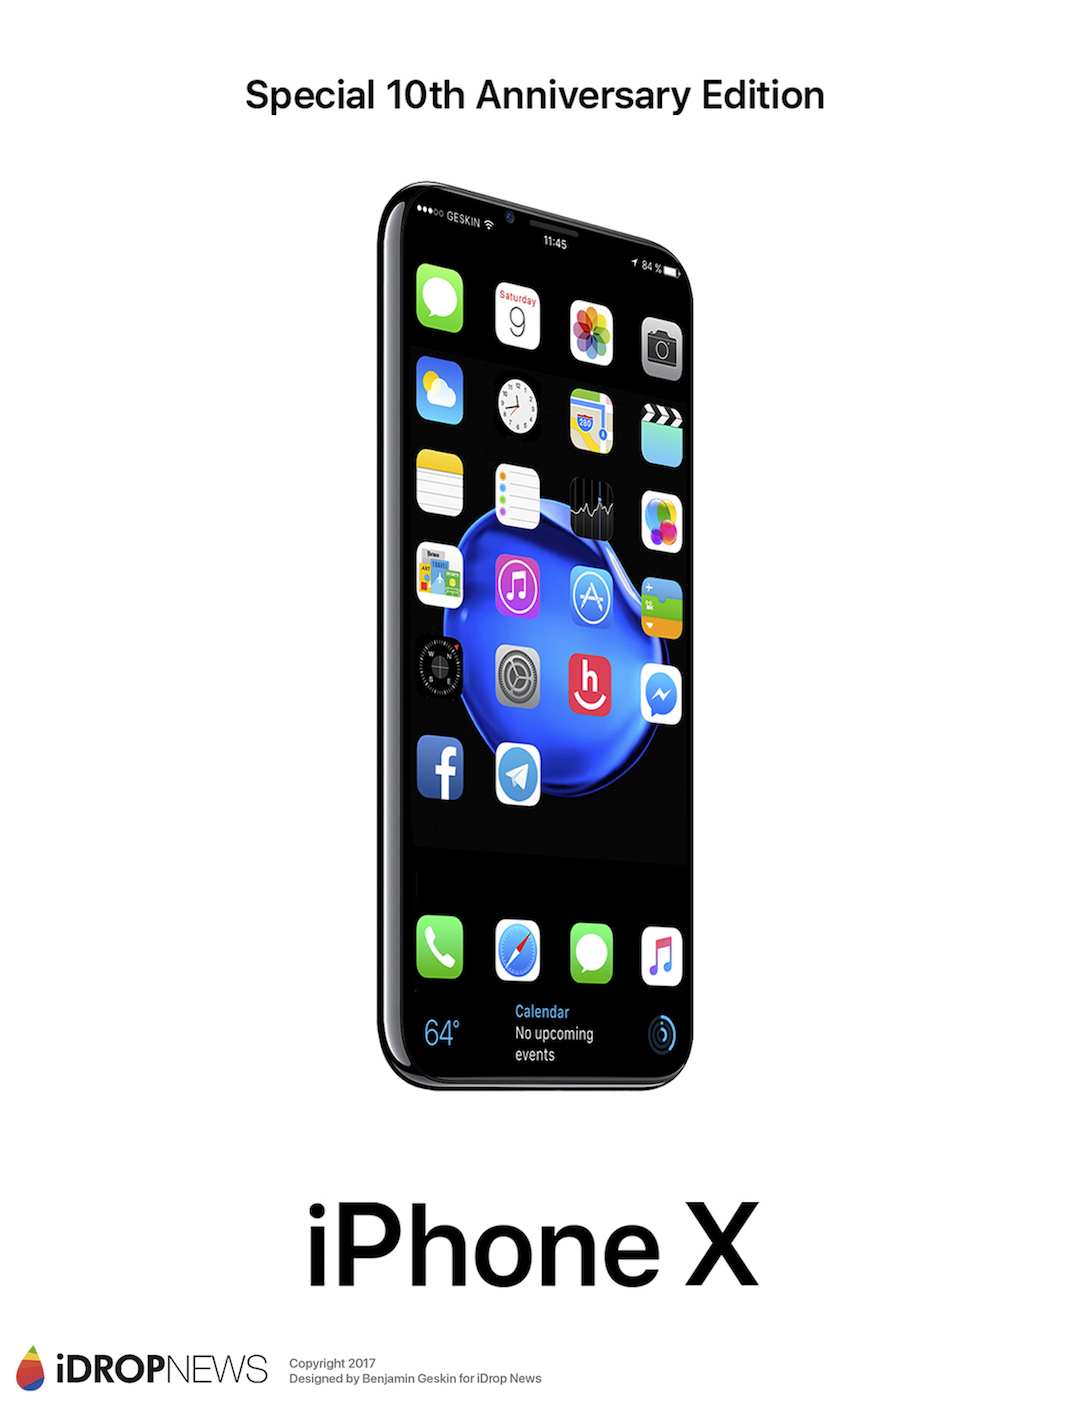 Apple iPhone X Concept Image